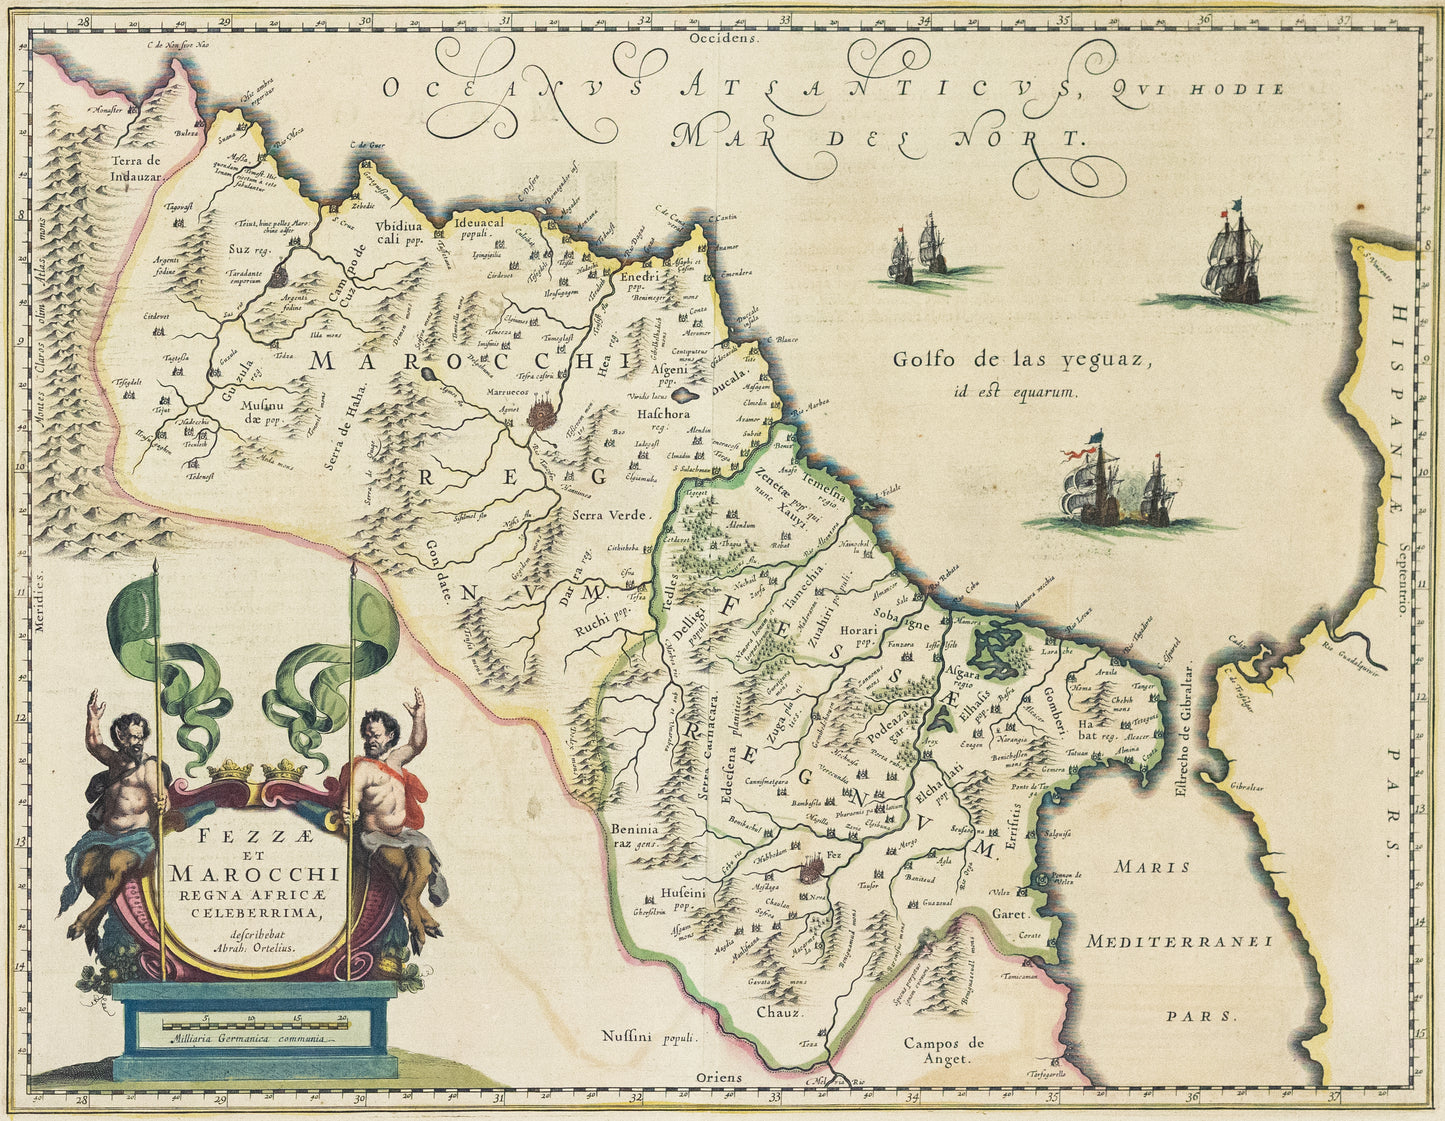 Blaeu, Willem Janszoon. Fezzae et Marocchi Regna Africae Celeberrima. Amsterdam: 1640